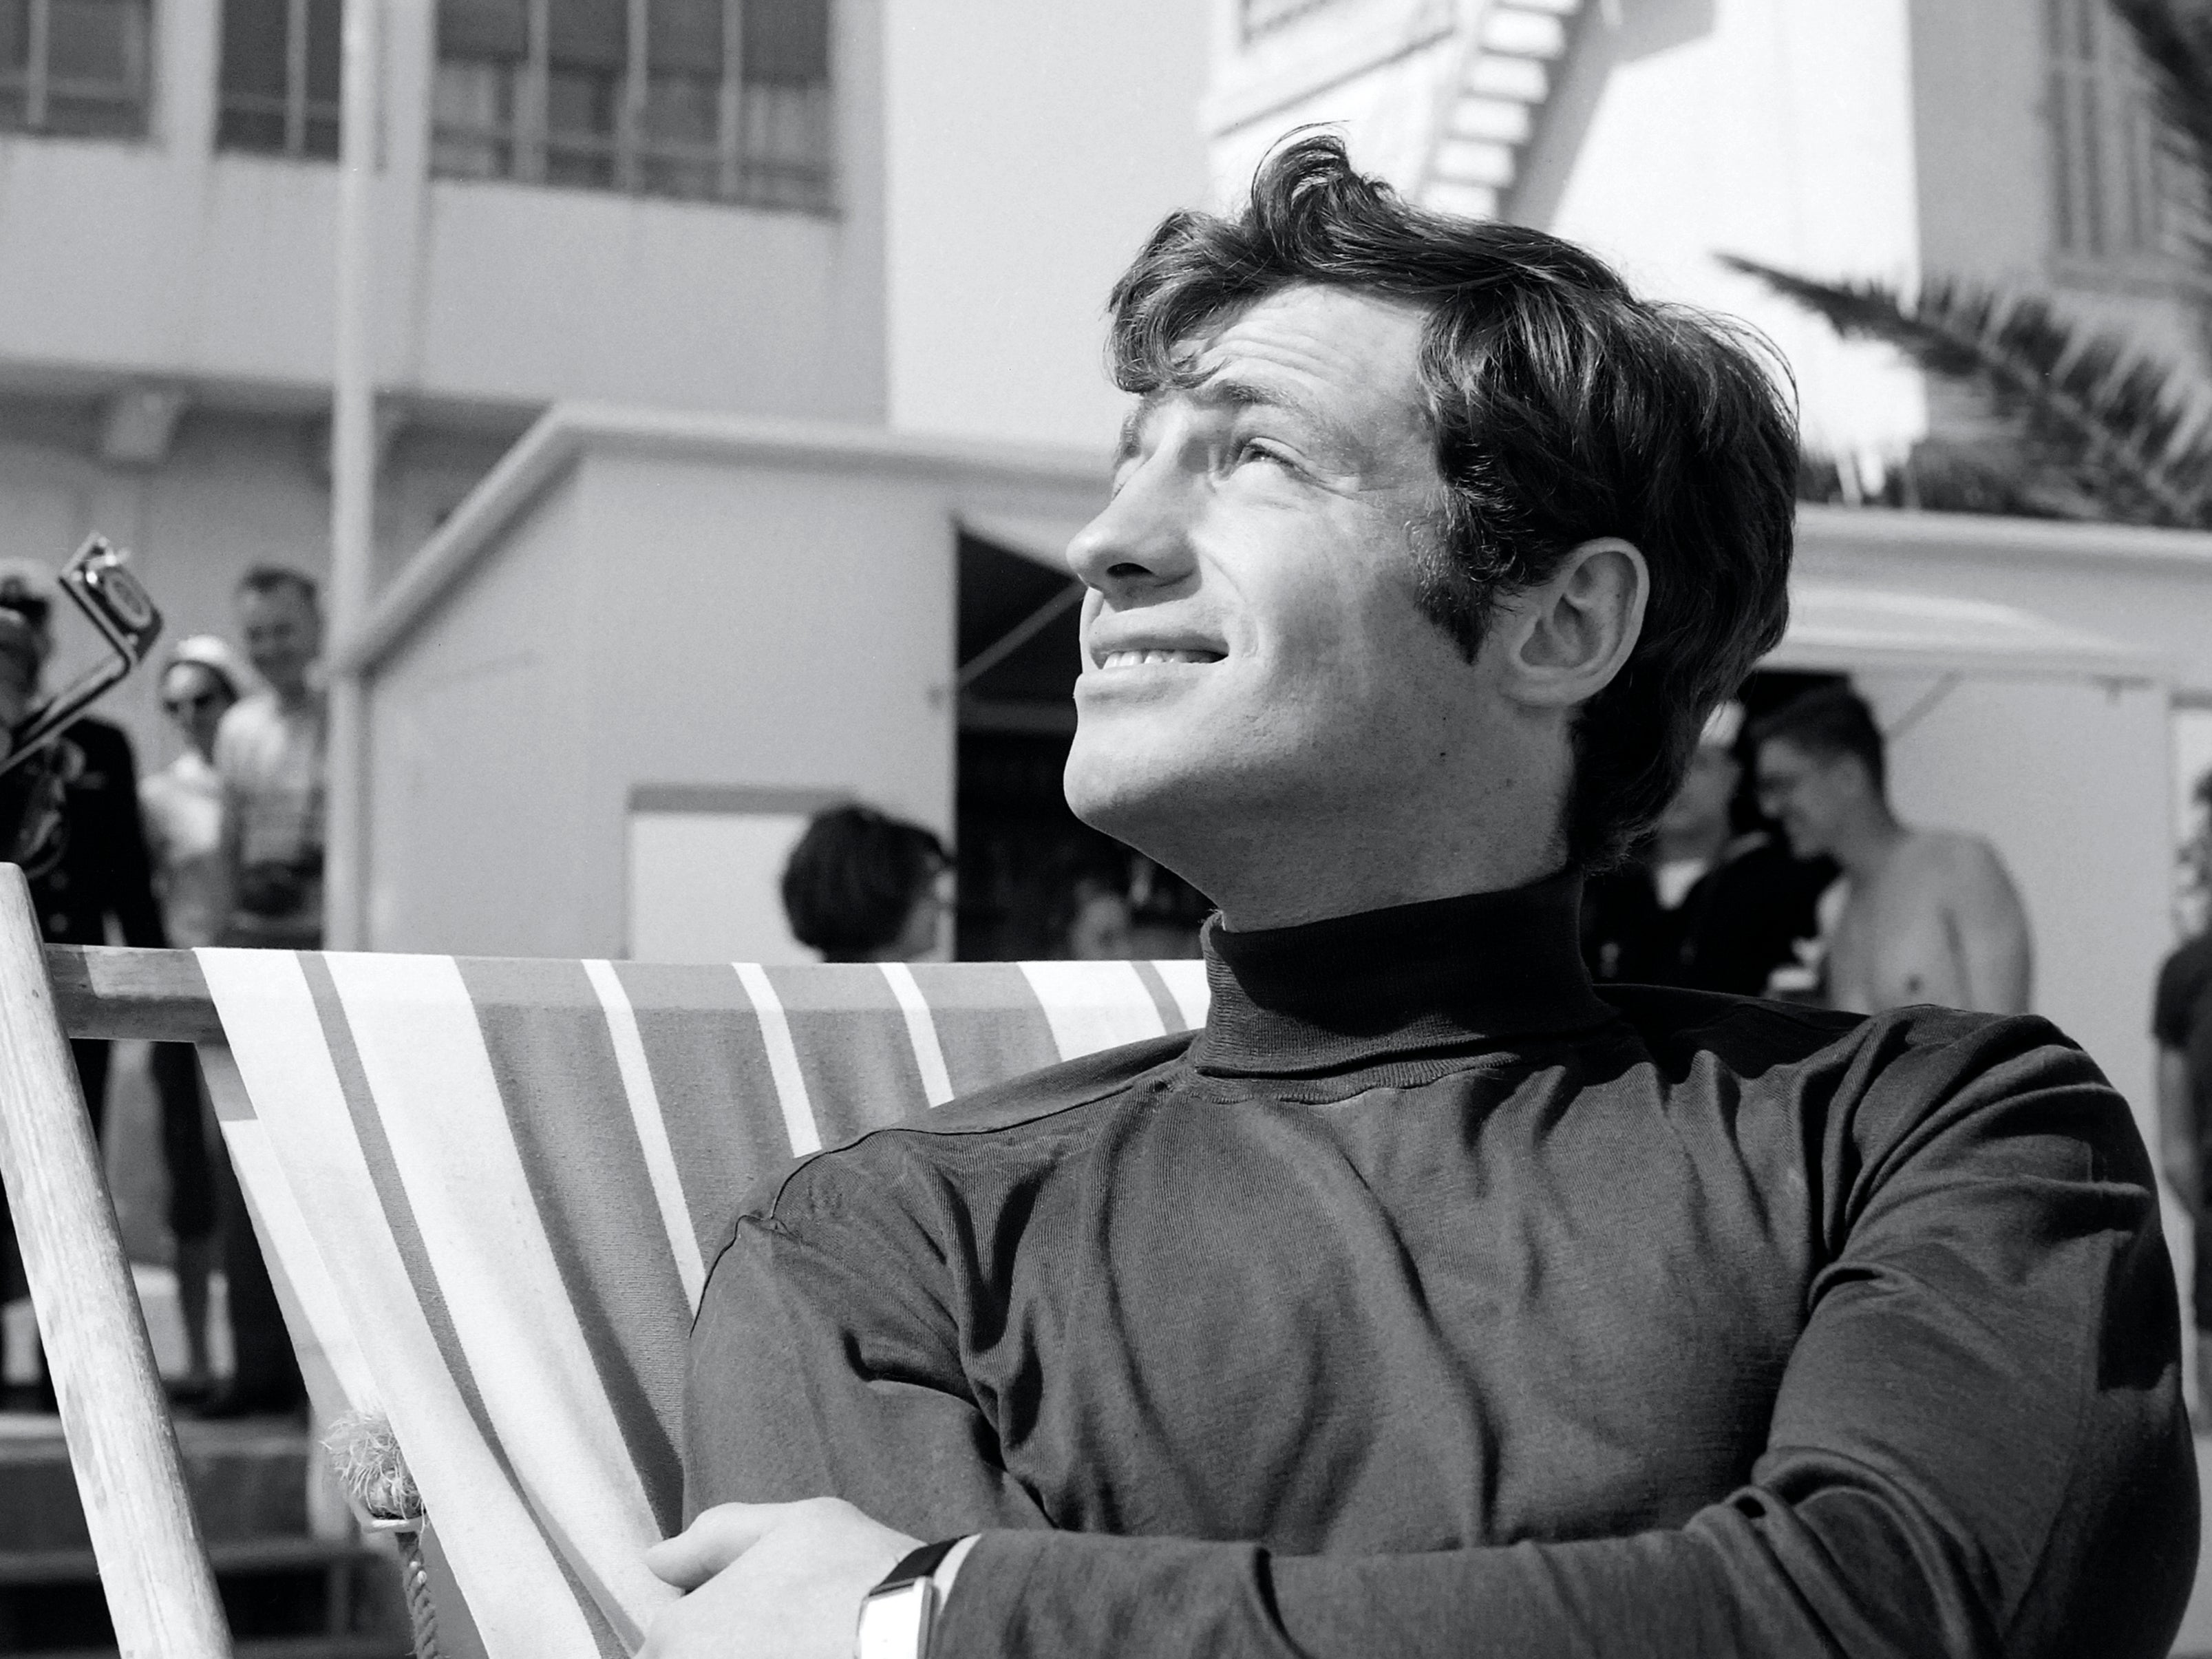 Jean-Paul Belmondo at Cannes Film Festival in 1964